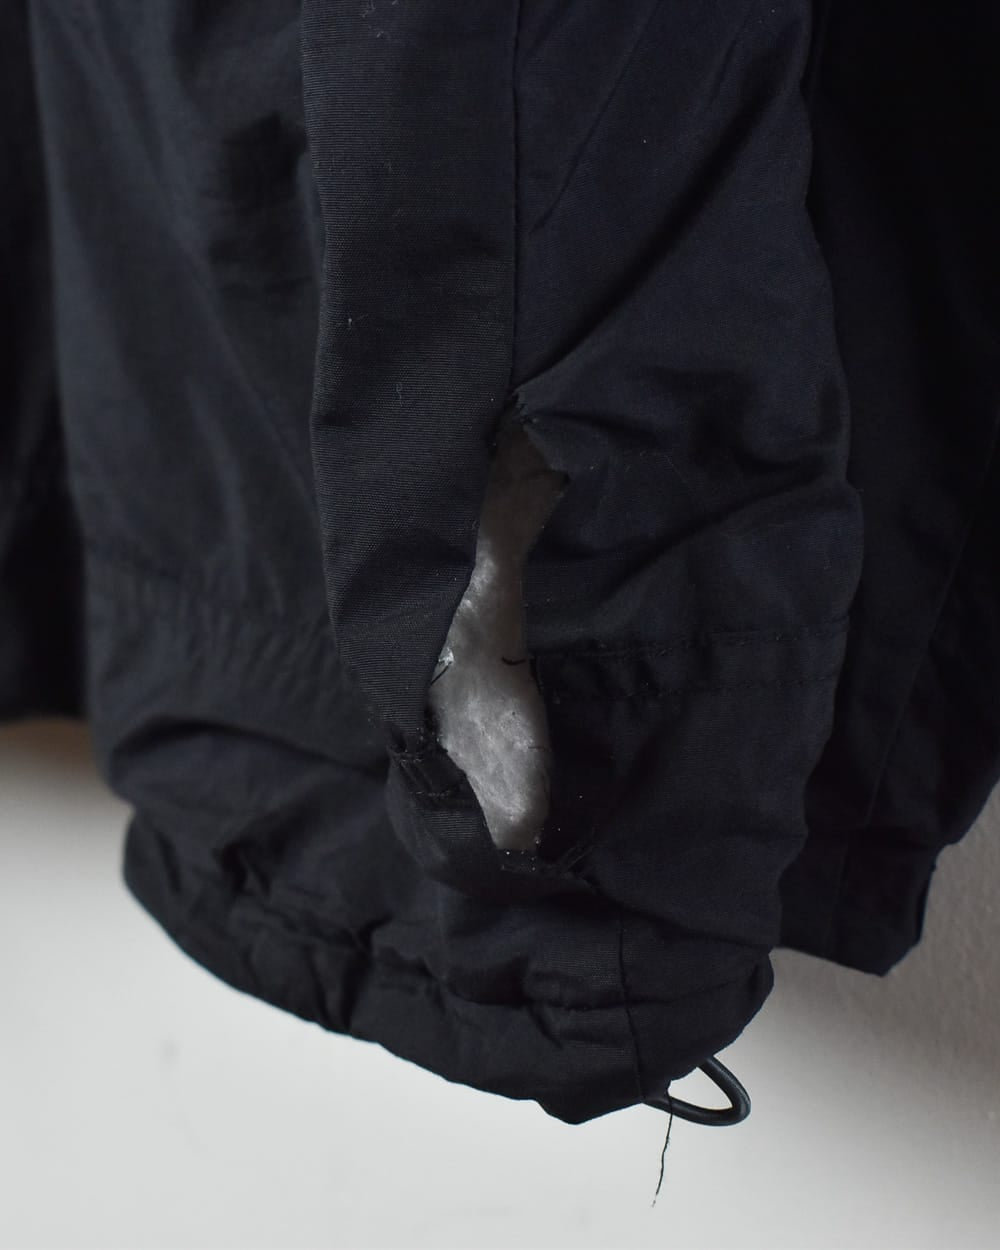 Black Columbia Fleece Lined Windbreaker Jacket - Medium